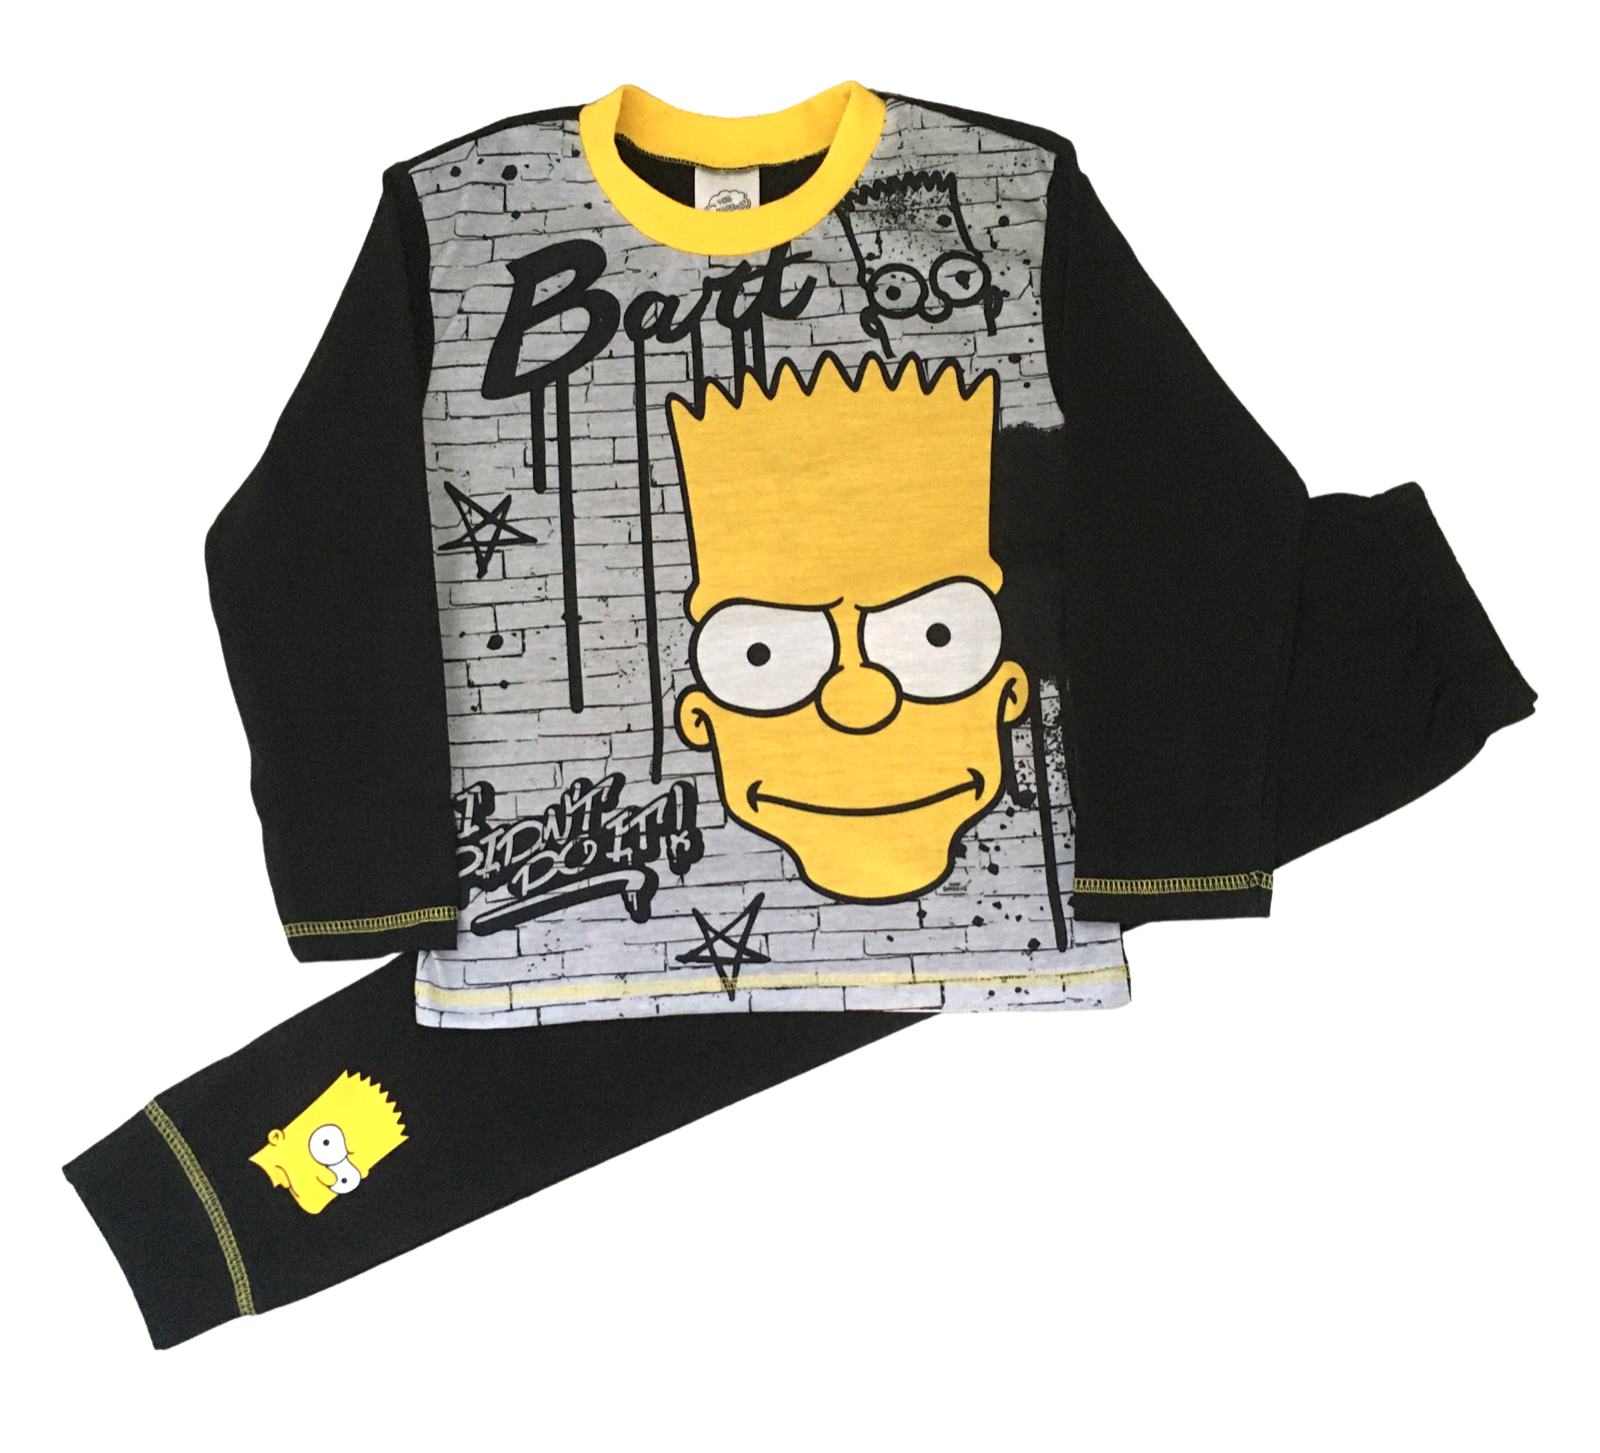 Boys Bart Simpson Long Sleeve Pjs Pyjama Set